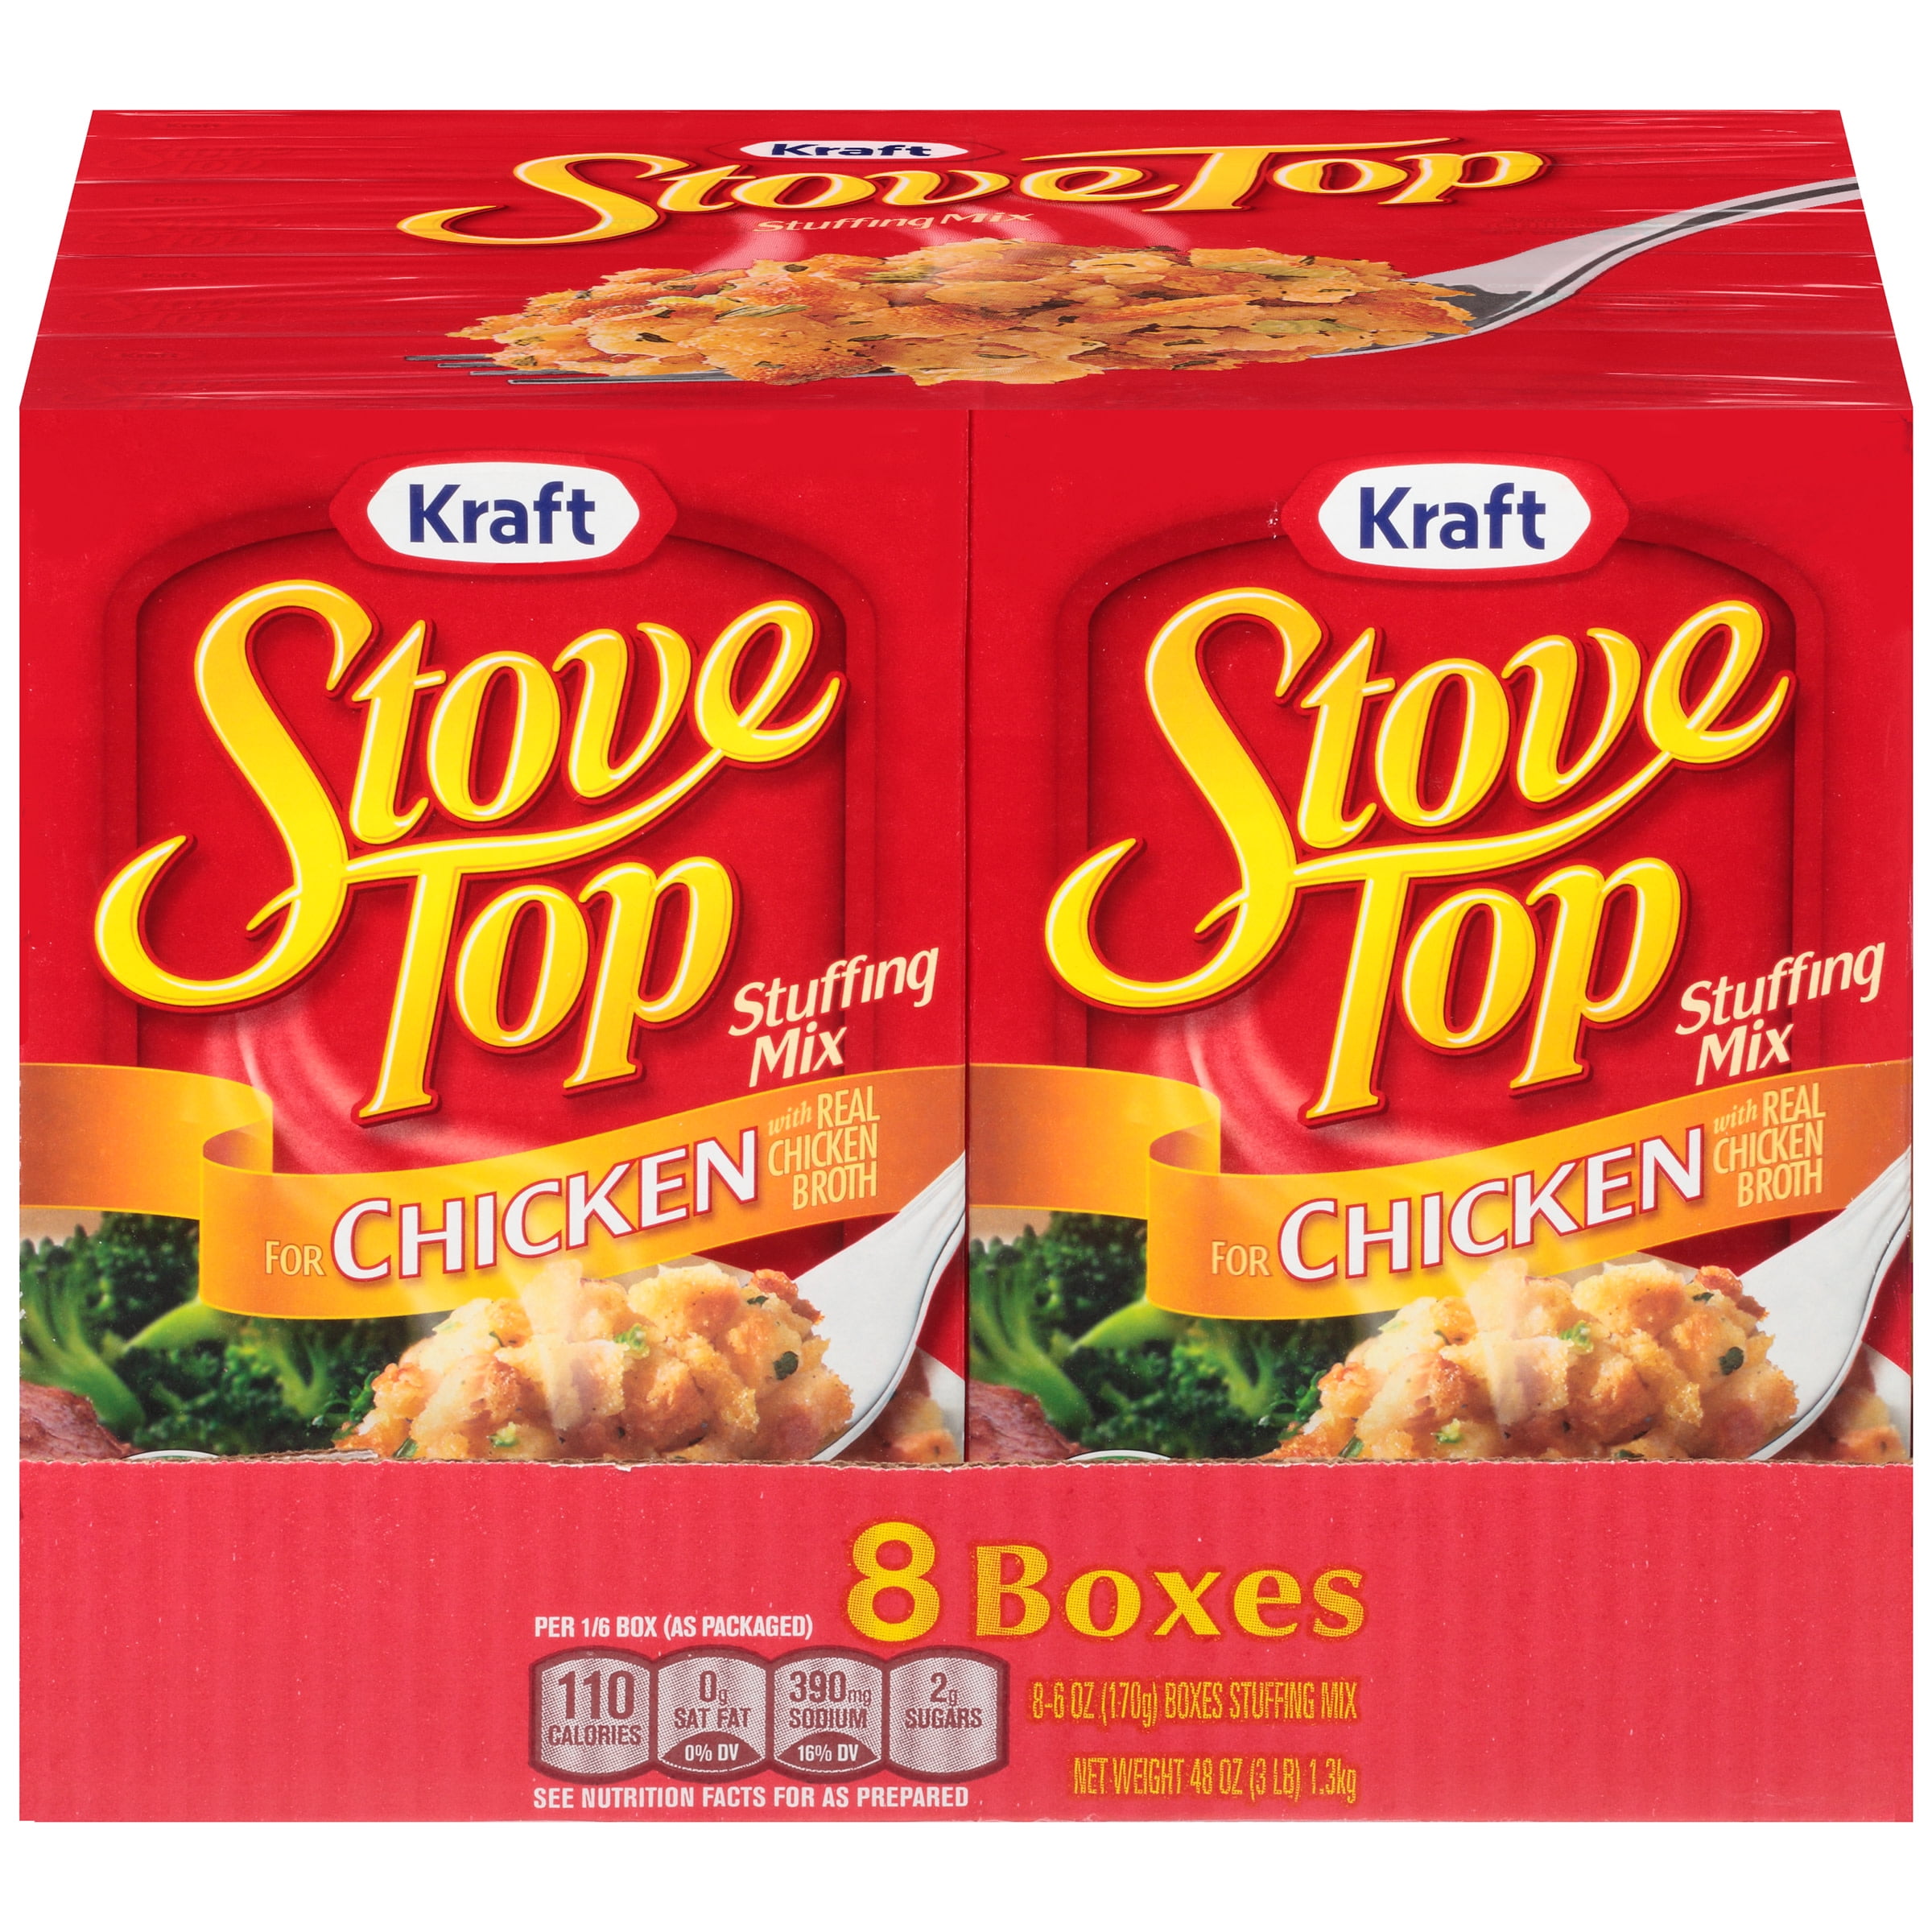 Kraft Stove Top Turkey Stuffing Mix (Pack of 3) 6 oz Boxes